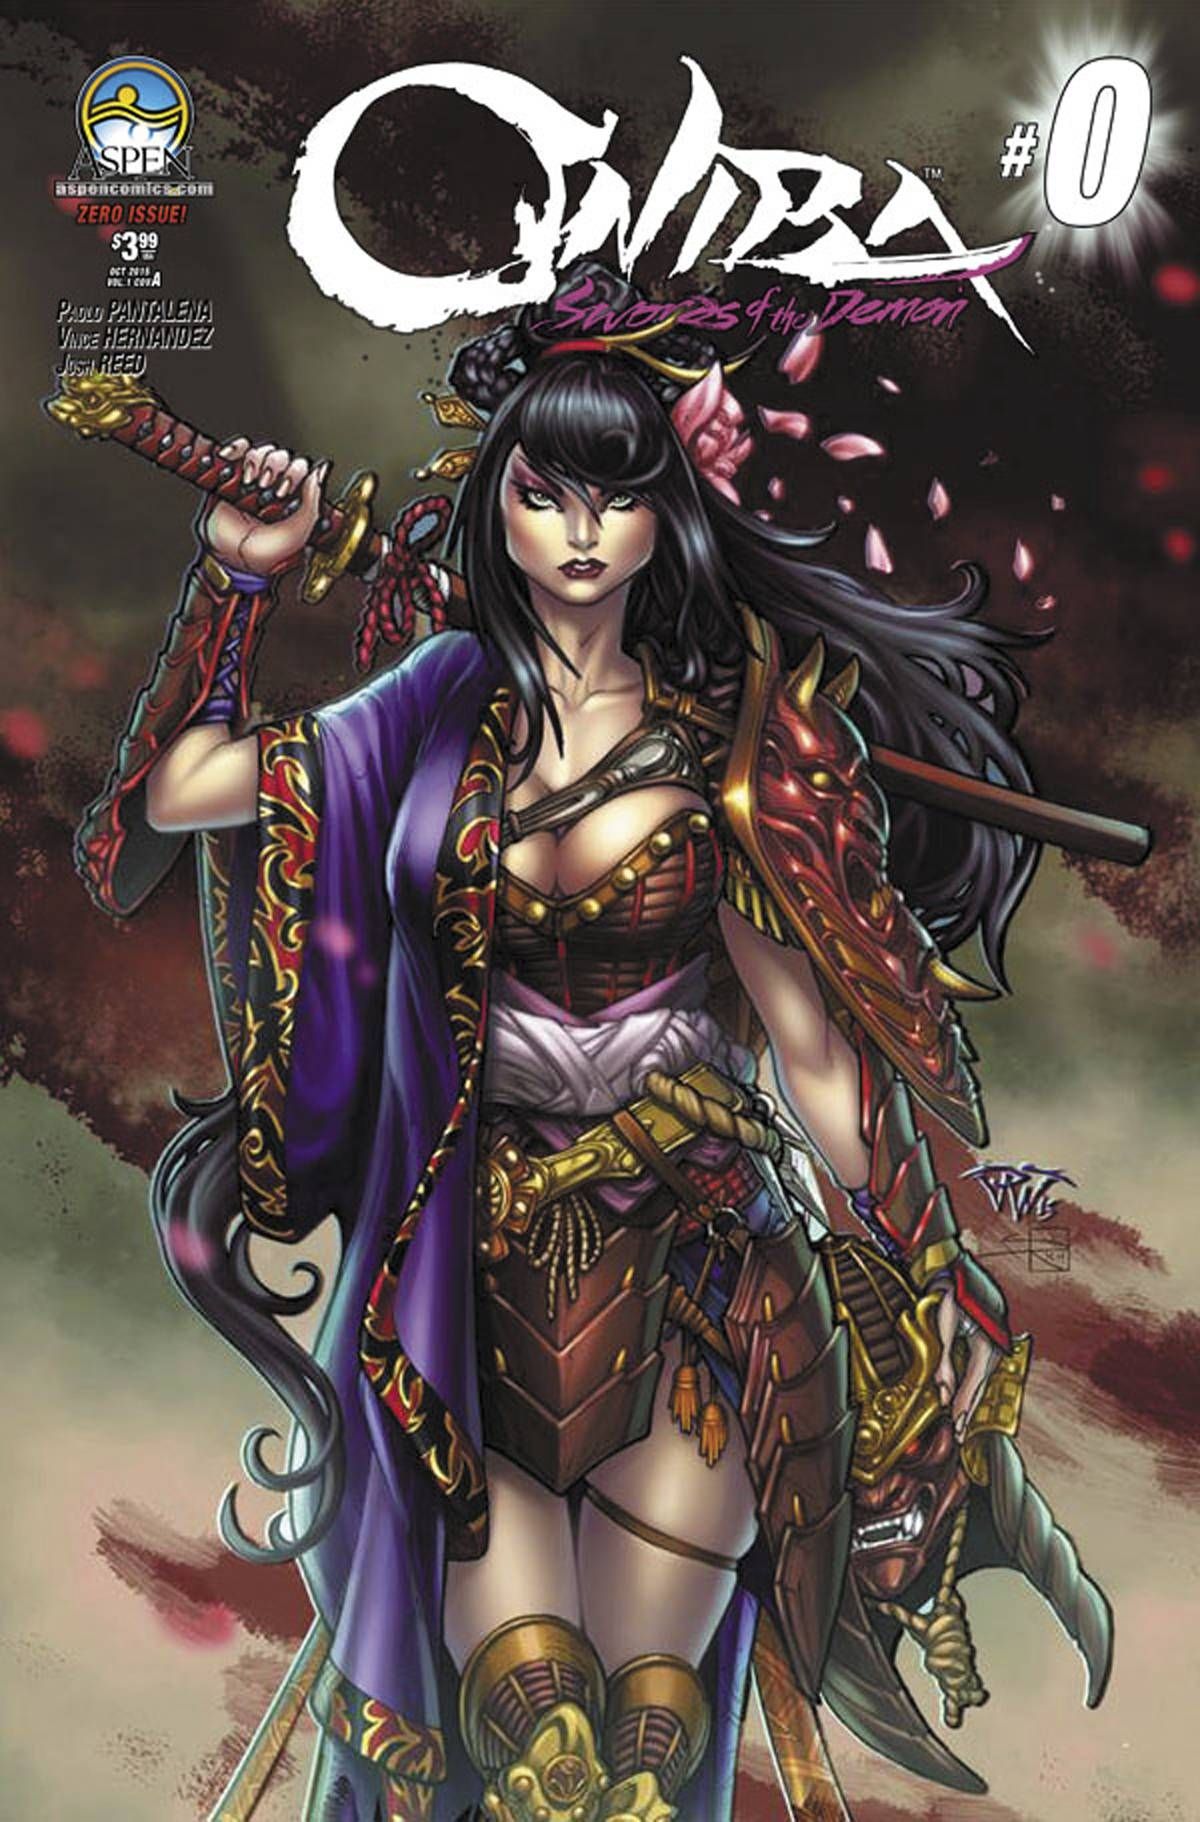 Oniba: Swords of the Demon #0 Comic